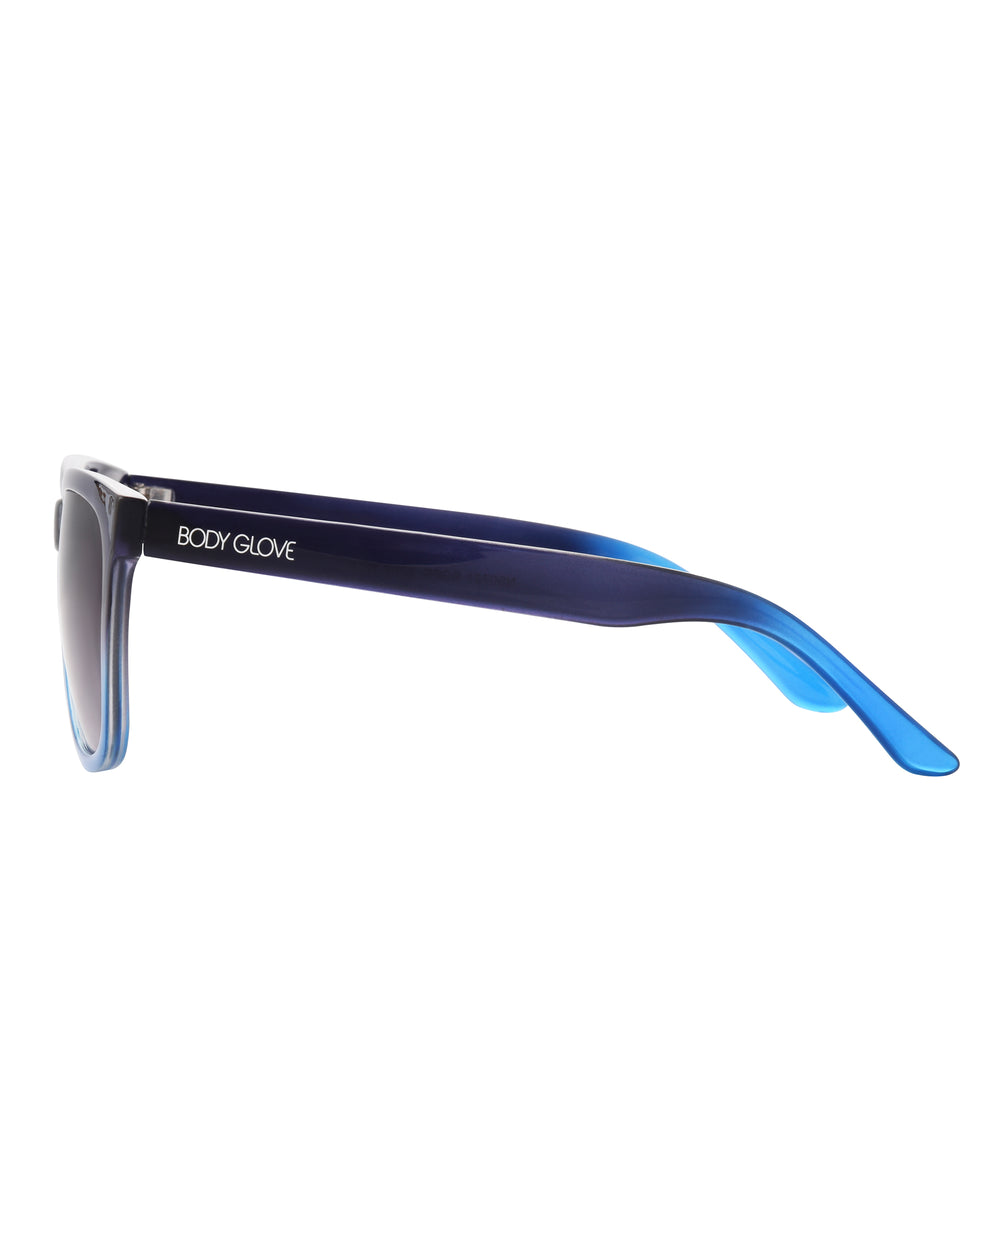 Maya Way-Style Frame Sunglasses - Navy Crystal